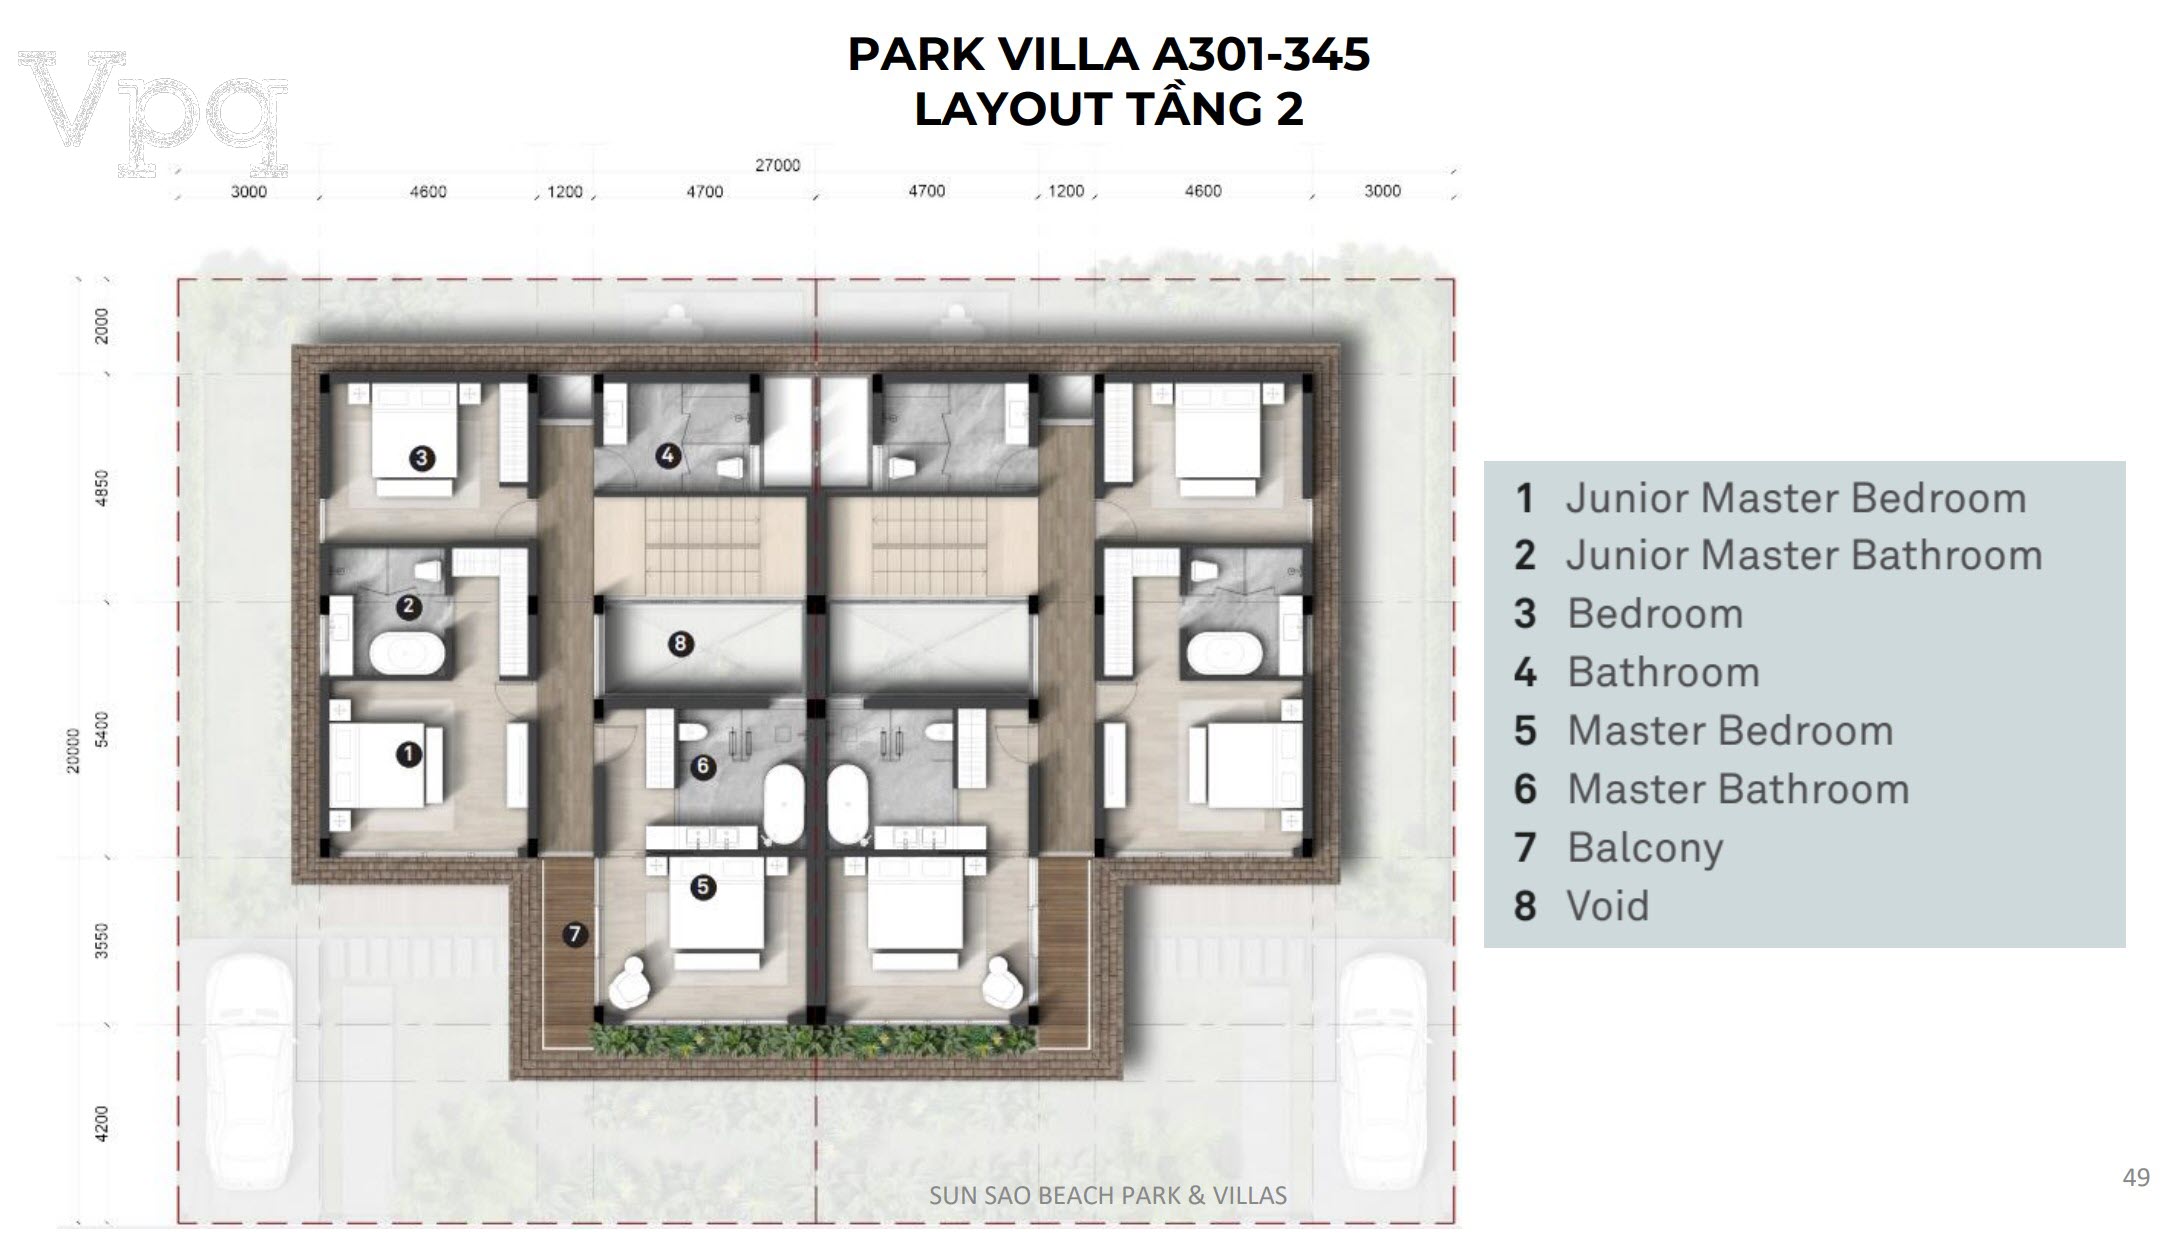 Makaio Park Villa A301-A345 - Layout tầng 2